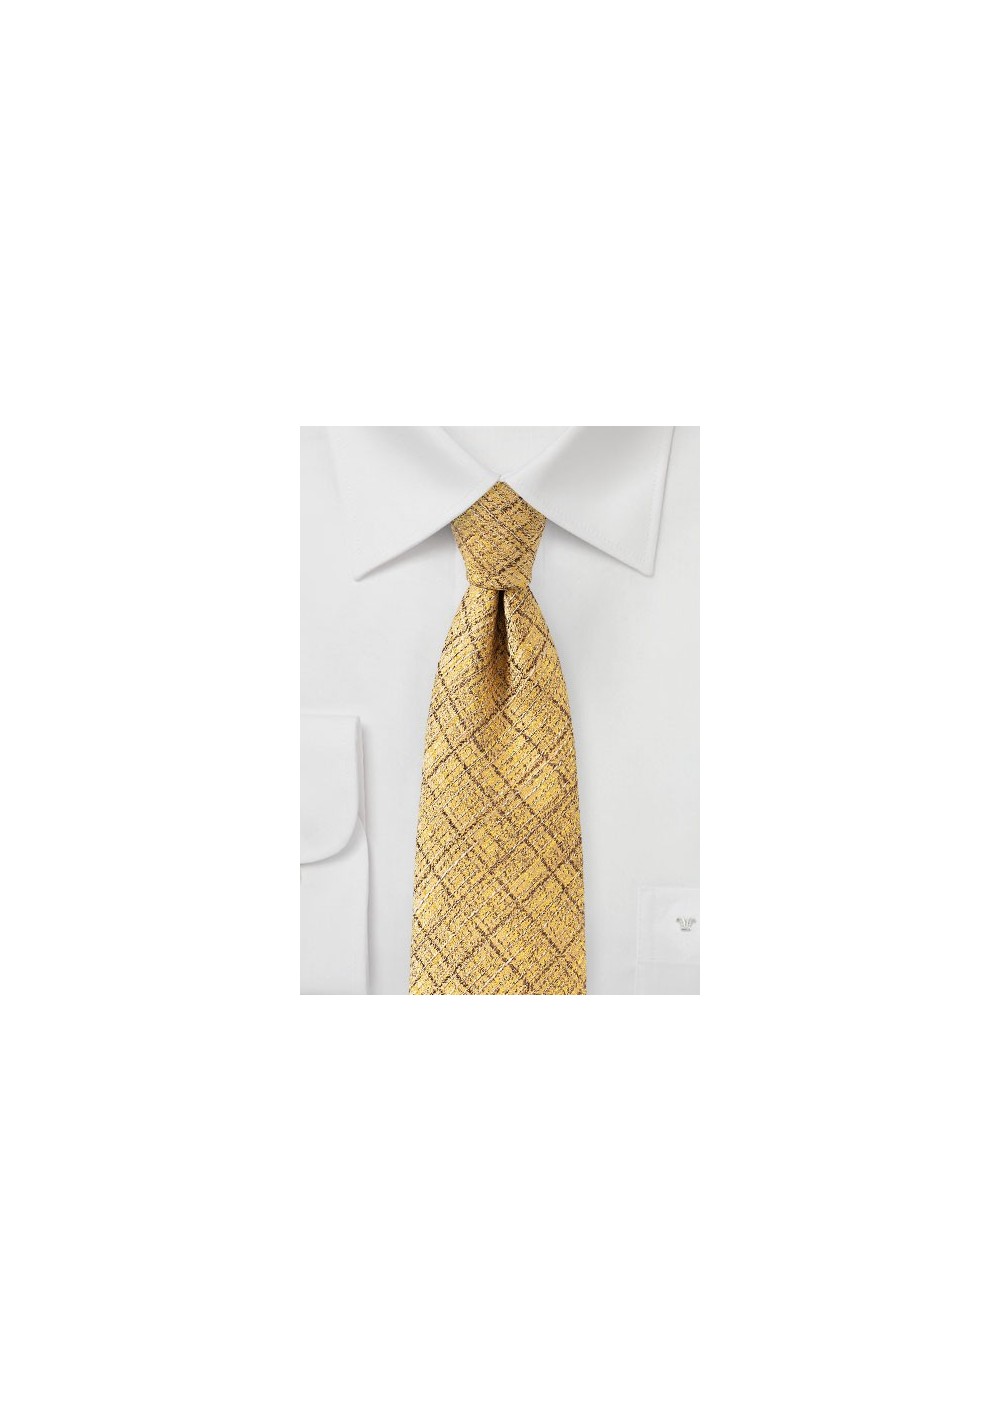 Shiny Gold Plaid Designer Tie